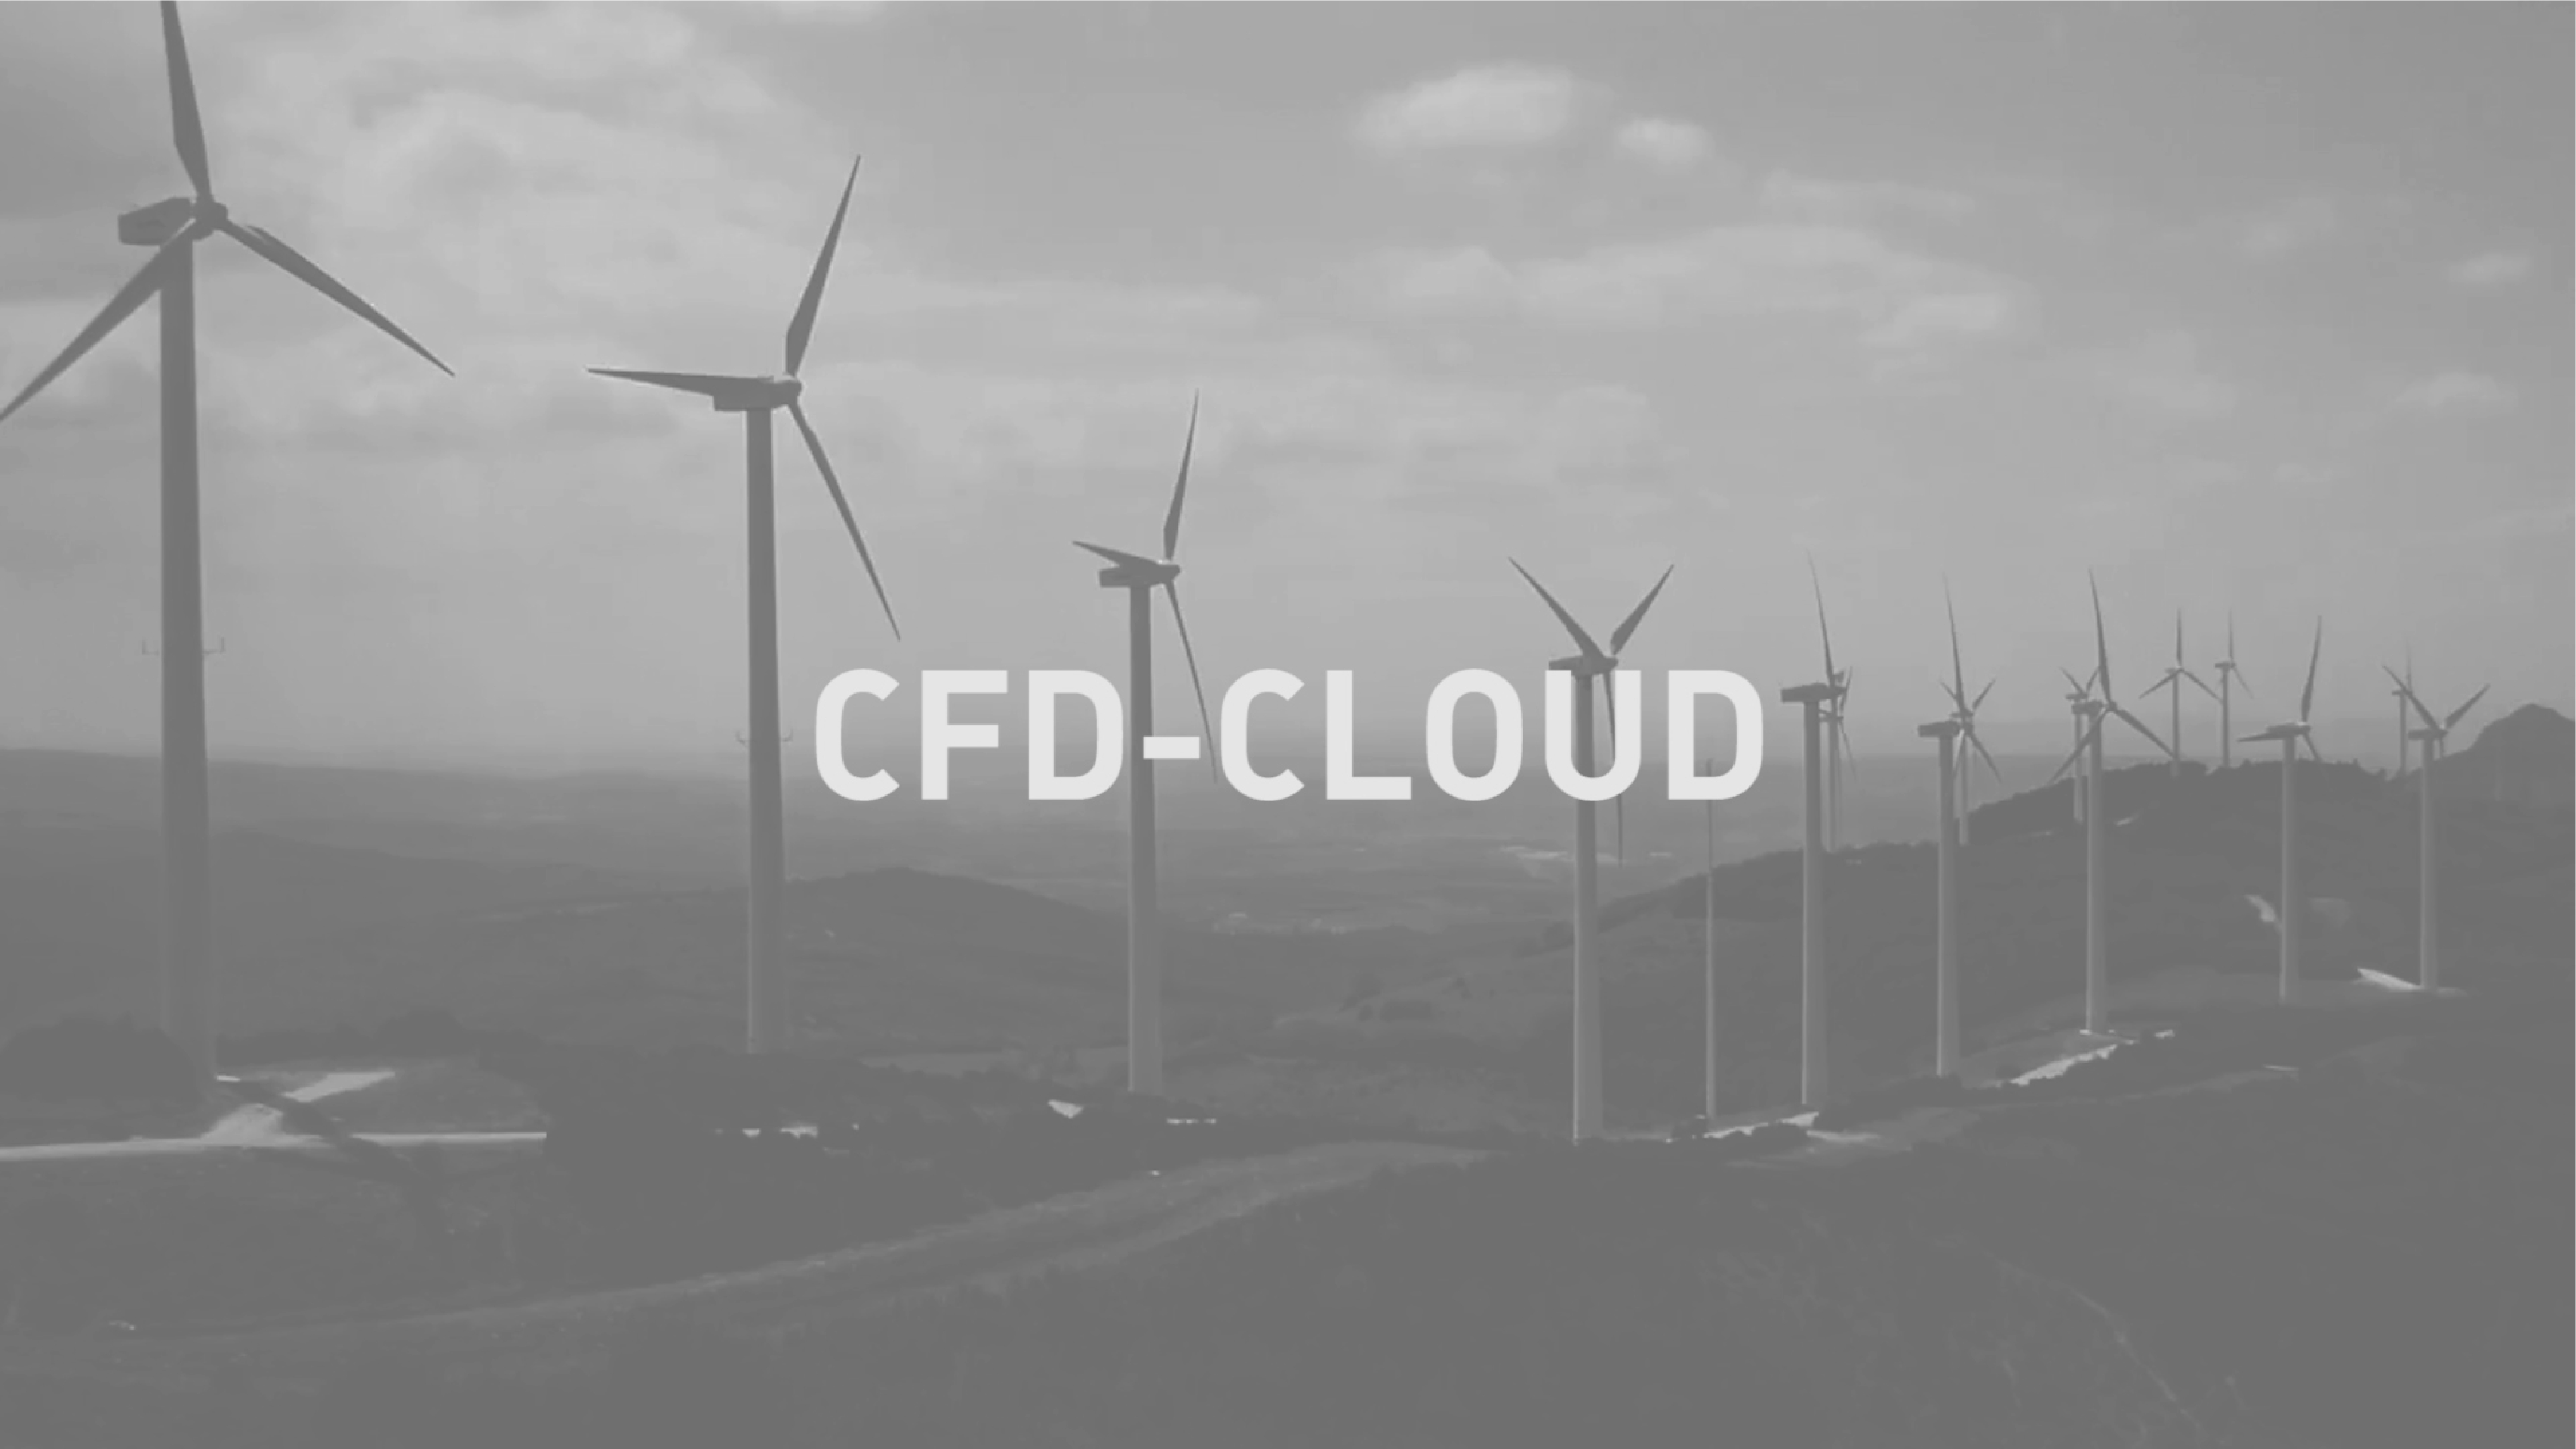 CFD-CLOUD